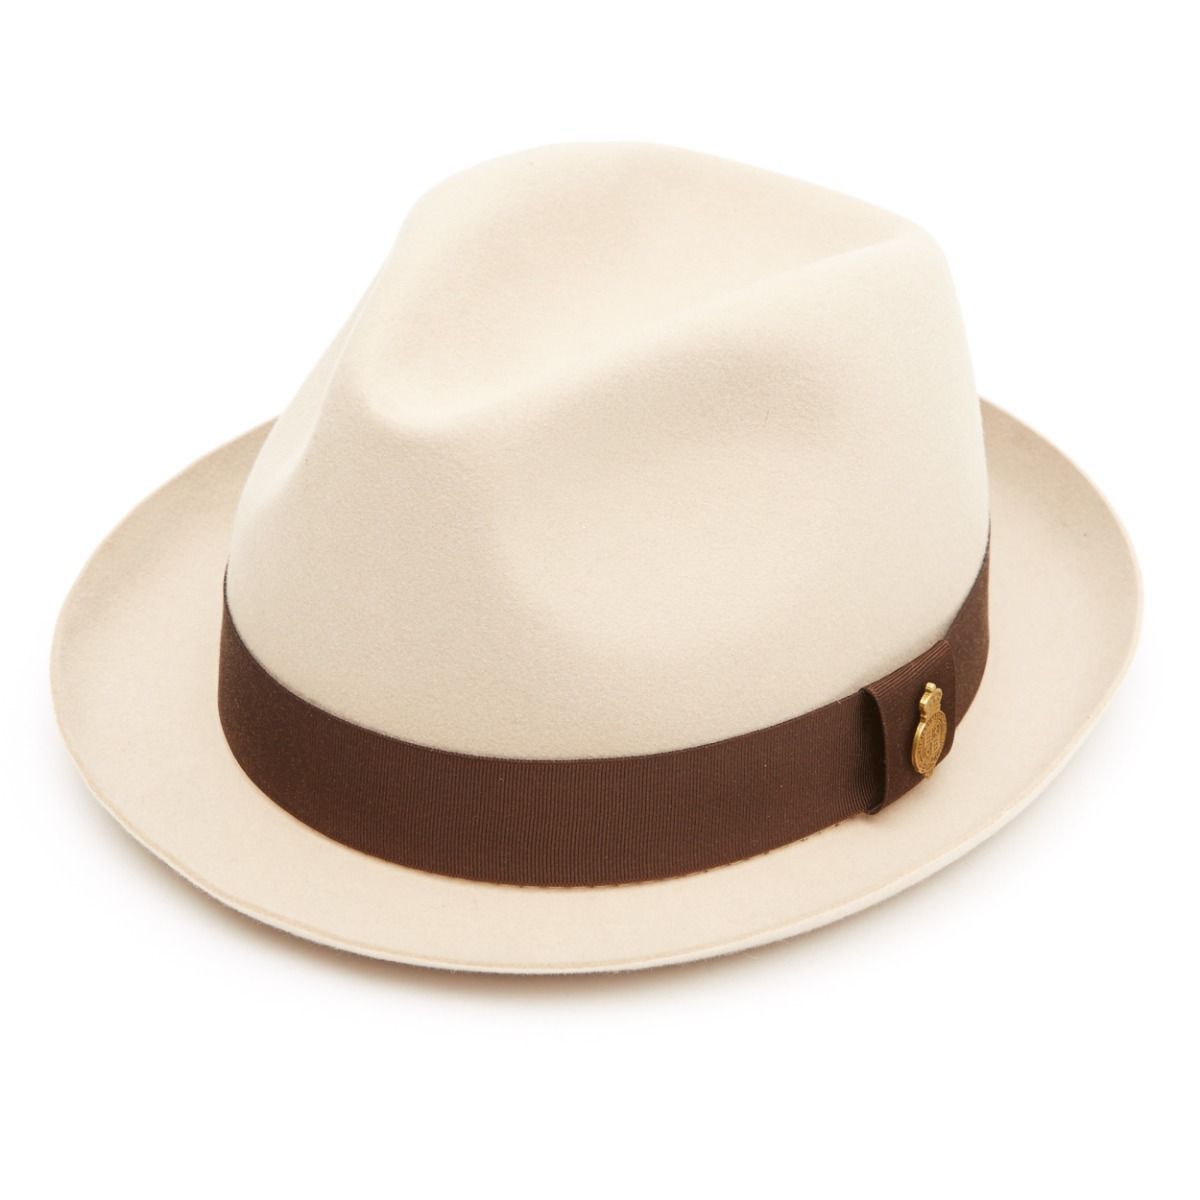 Pembroke Superfine Beaver Fur Felt Trilby Hat